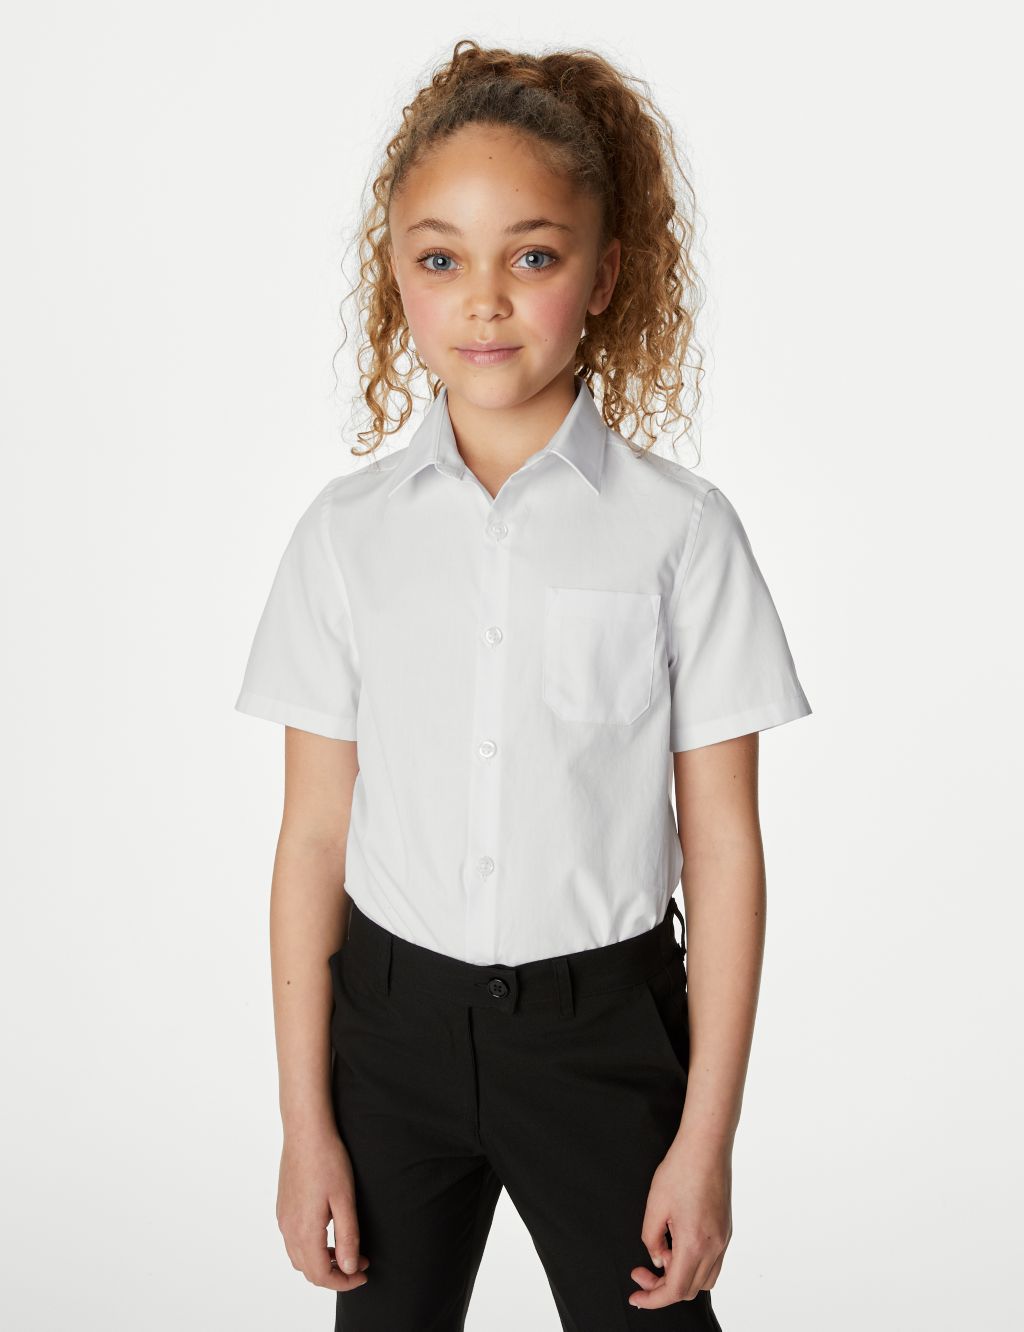 2pk Girls’ Slim Fit Cotton School Shirts (2-18 Yrs) image 2